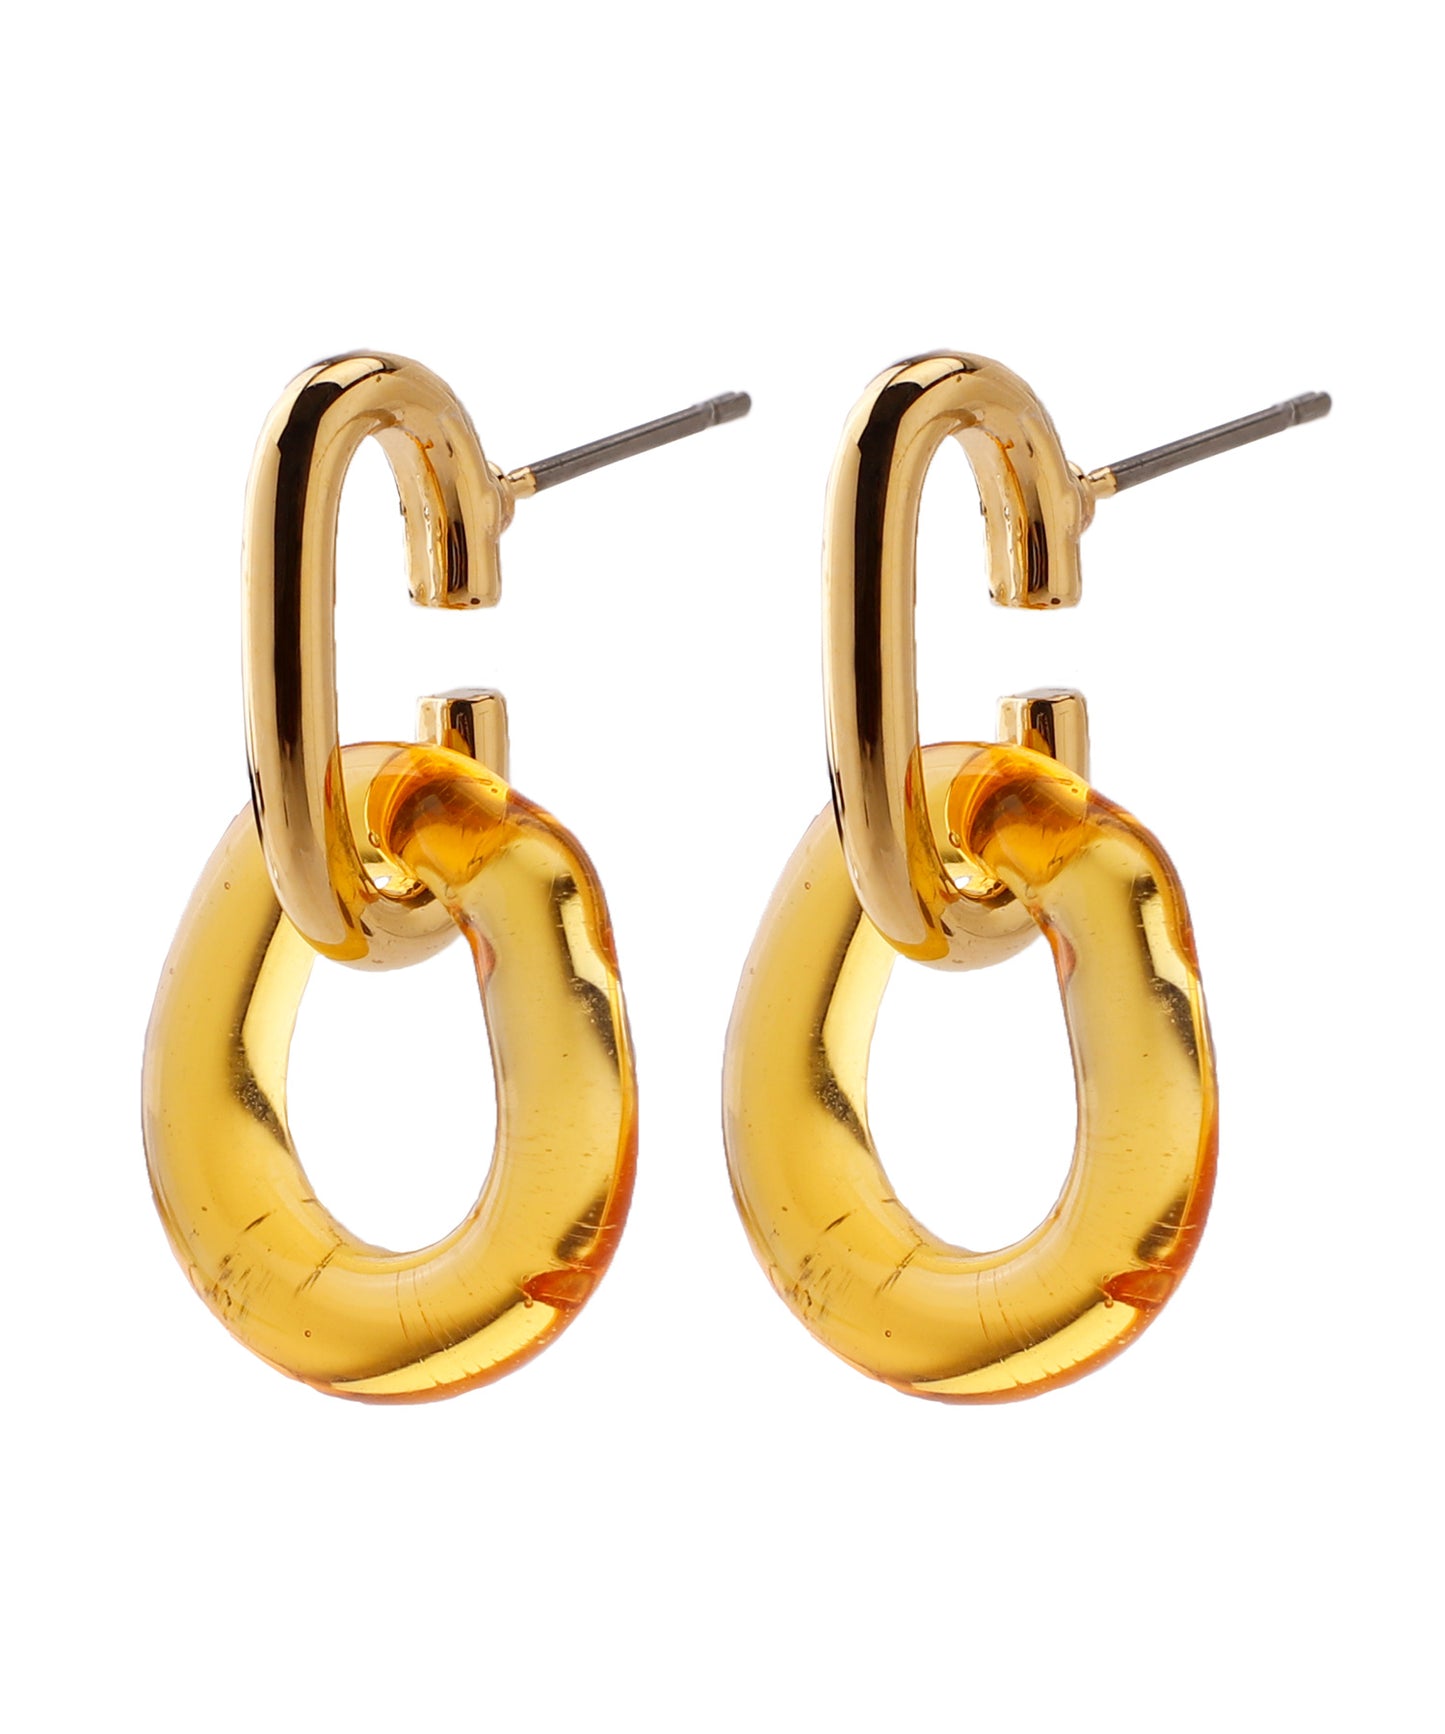 Glass × Metal Earrings[Ownideal]